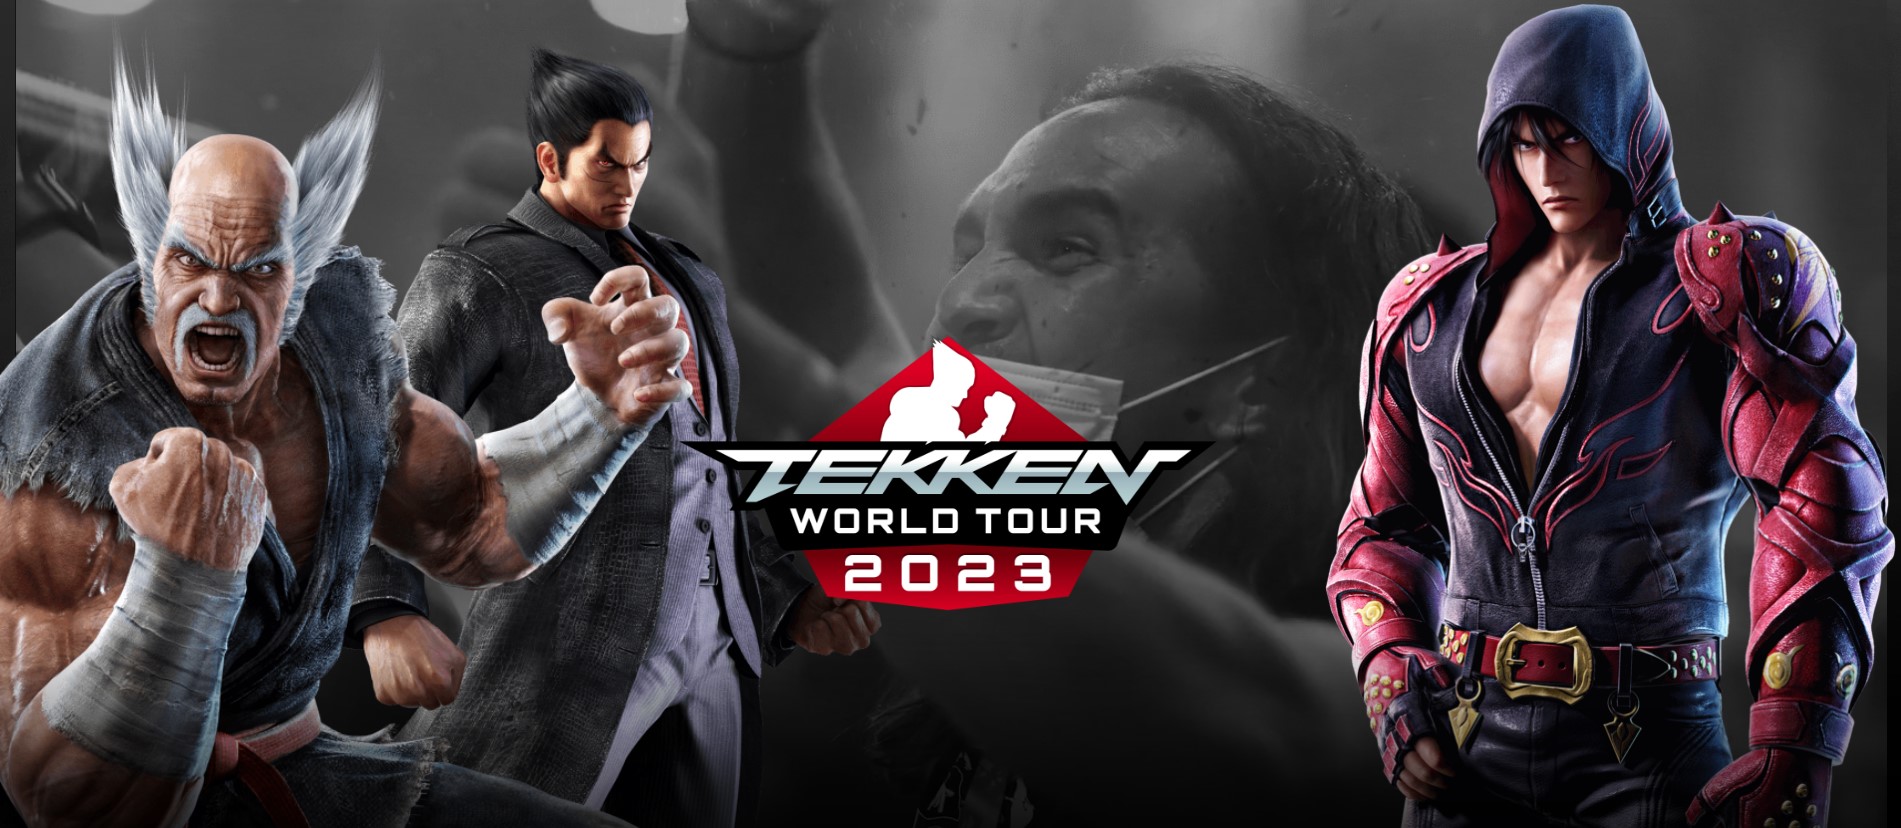 Tekken World Tour 2023 começa em março